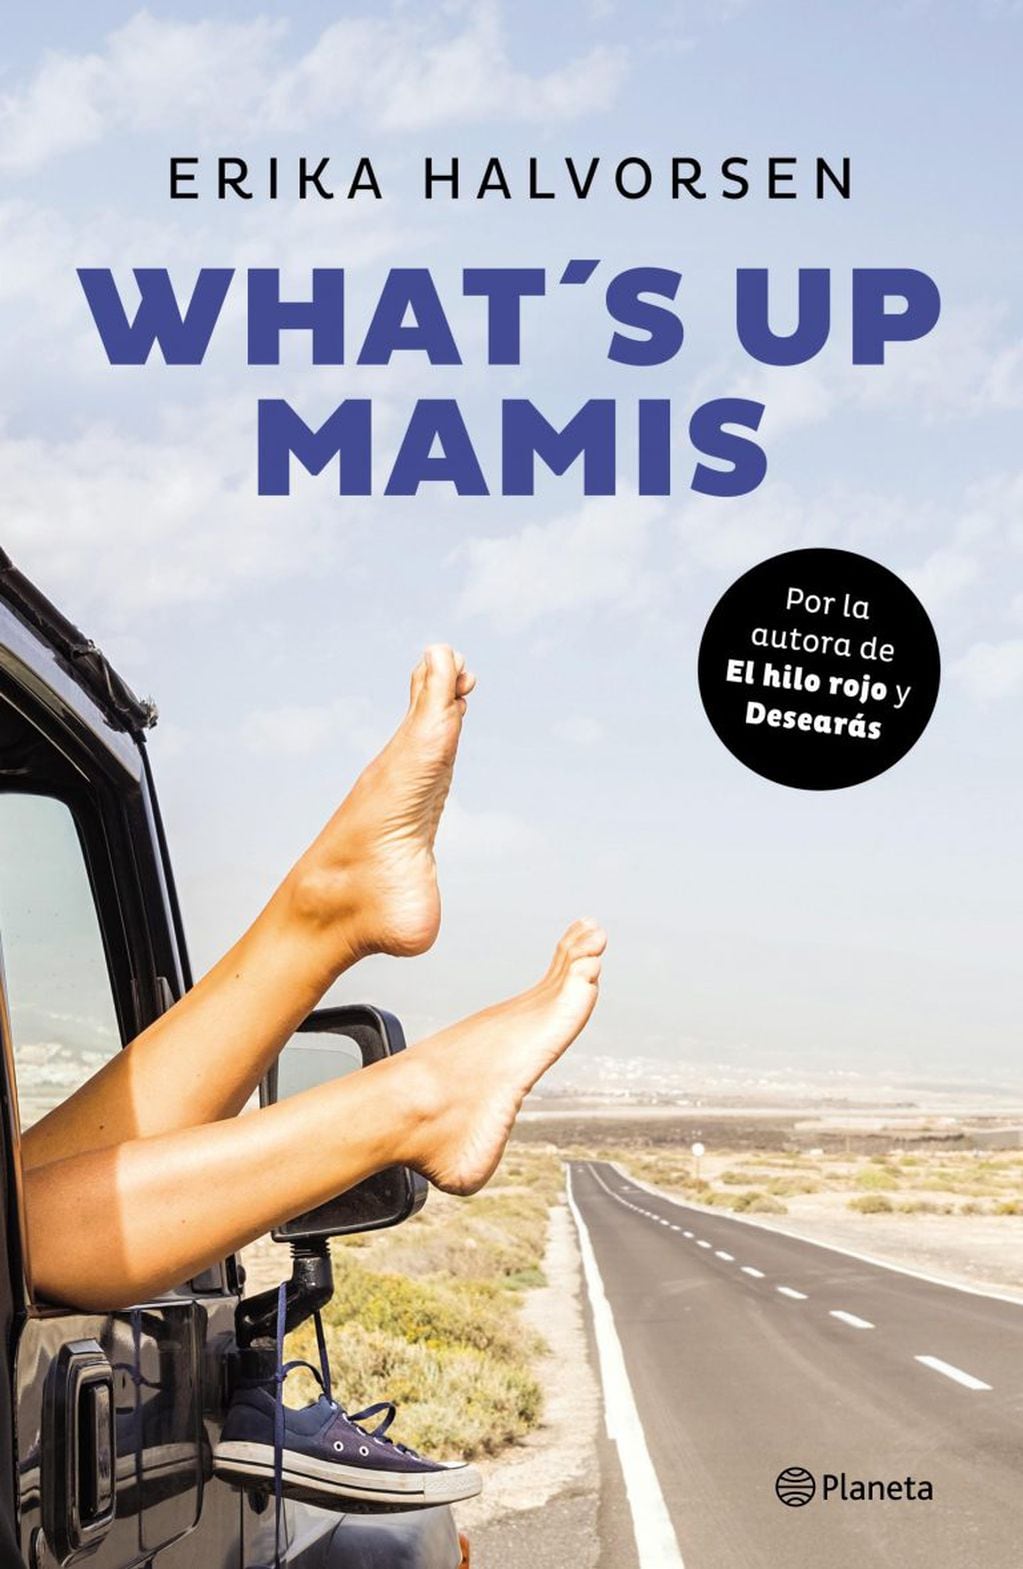 La portada de "What's up mamis" de editorial Planeta (Foto: Prensa Planeta).